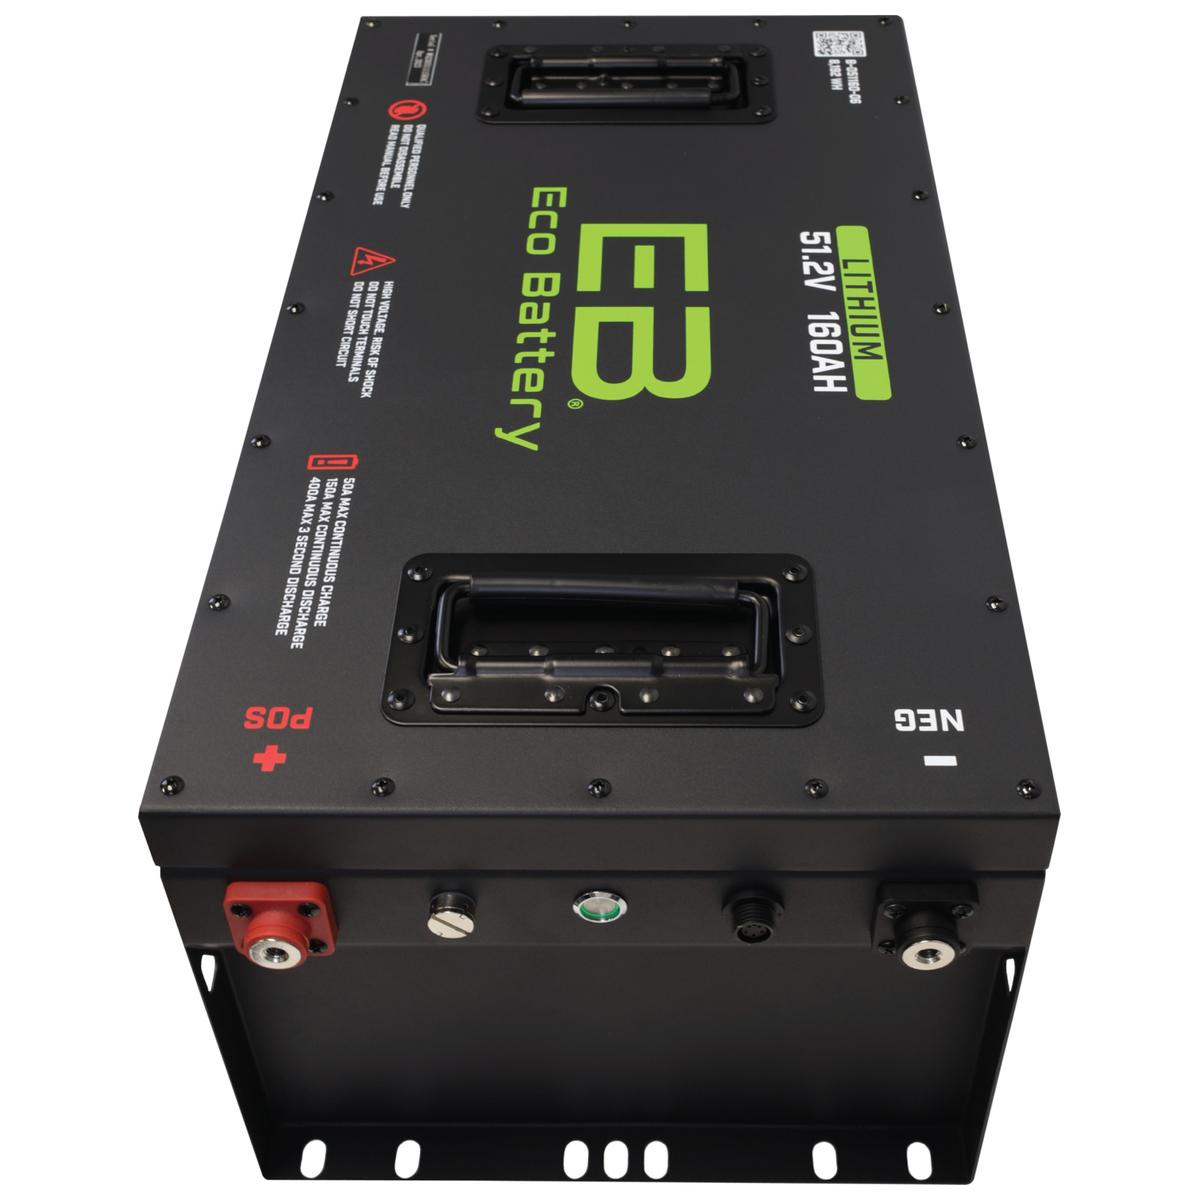 EZGO TXT Eco Lithium 51.2V 160Ah Battery Bundle